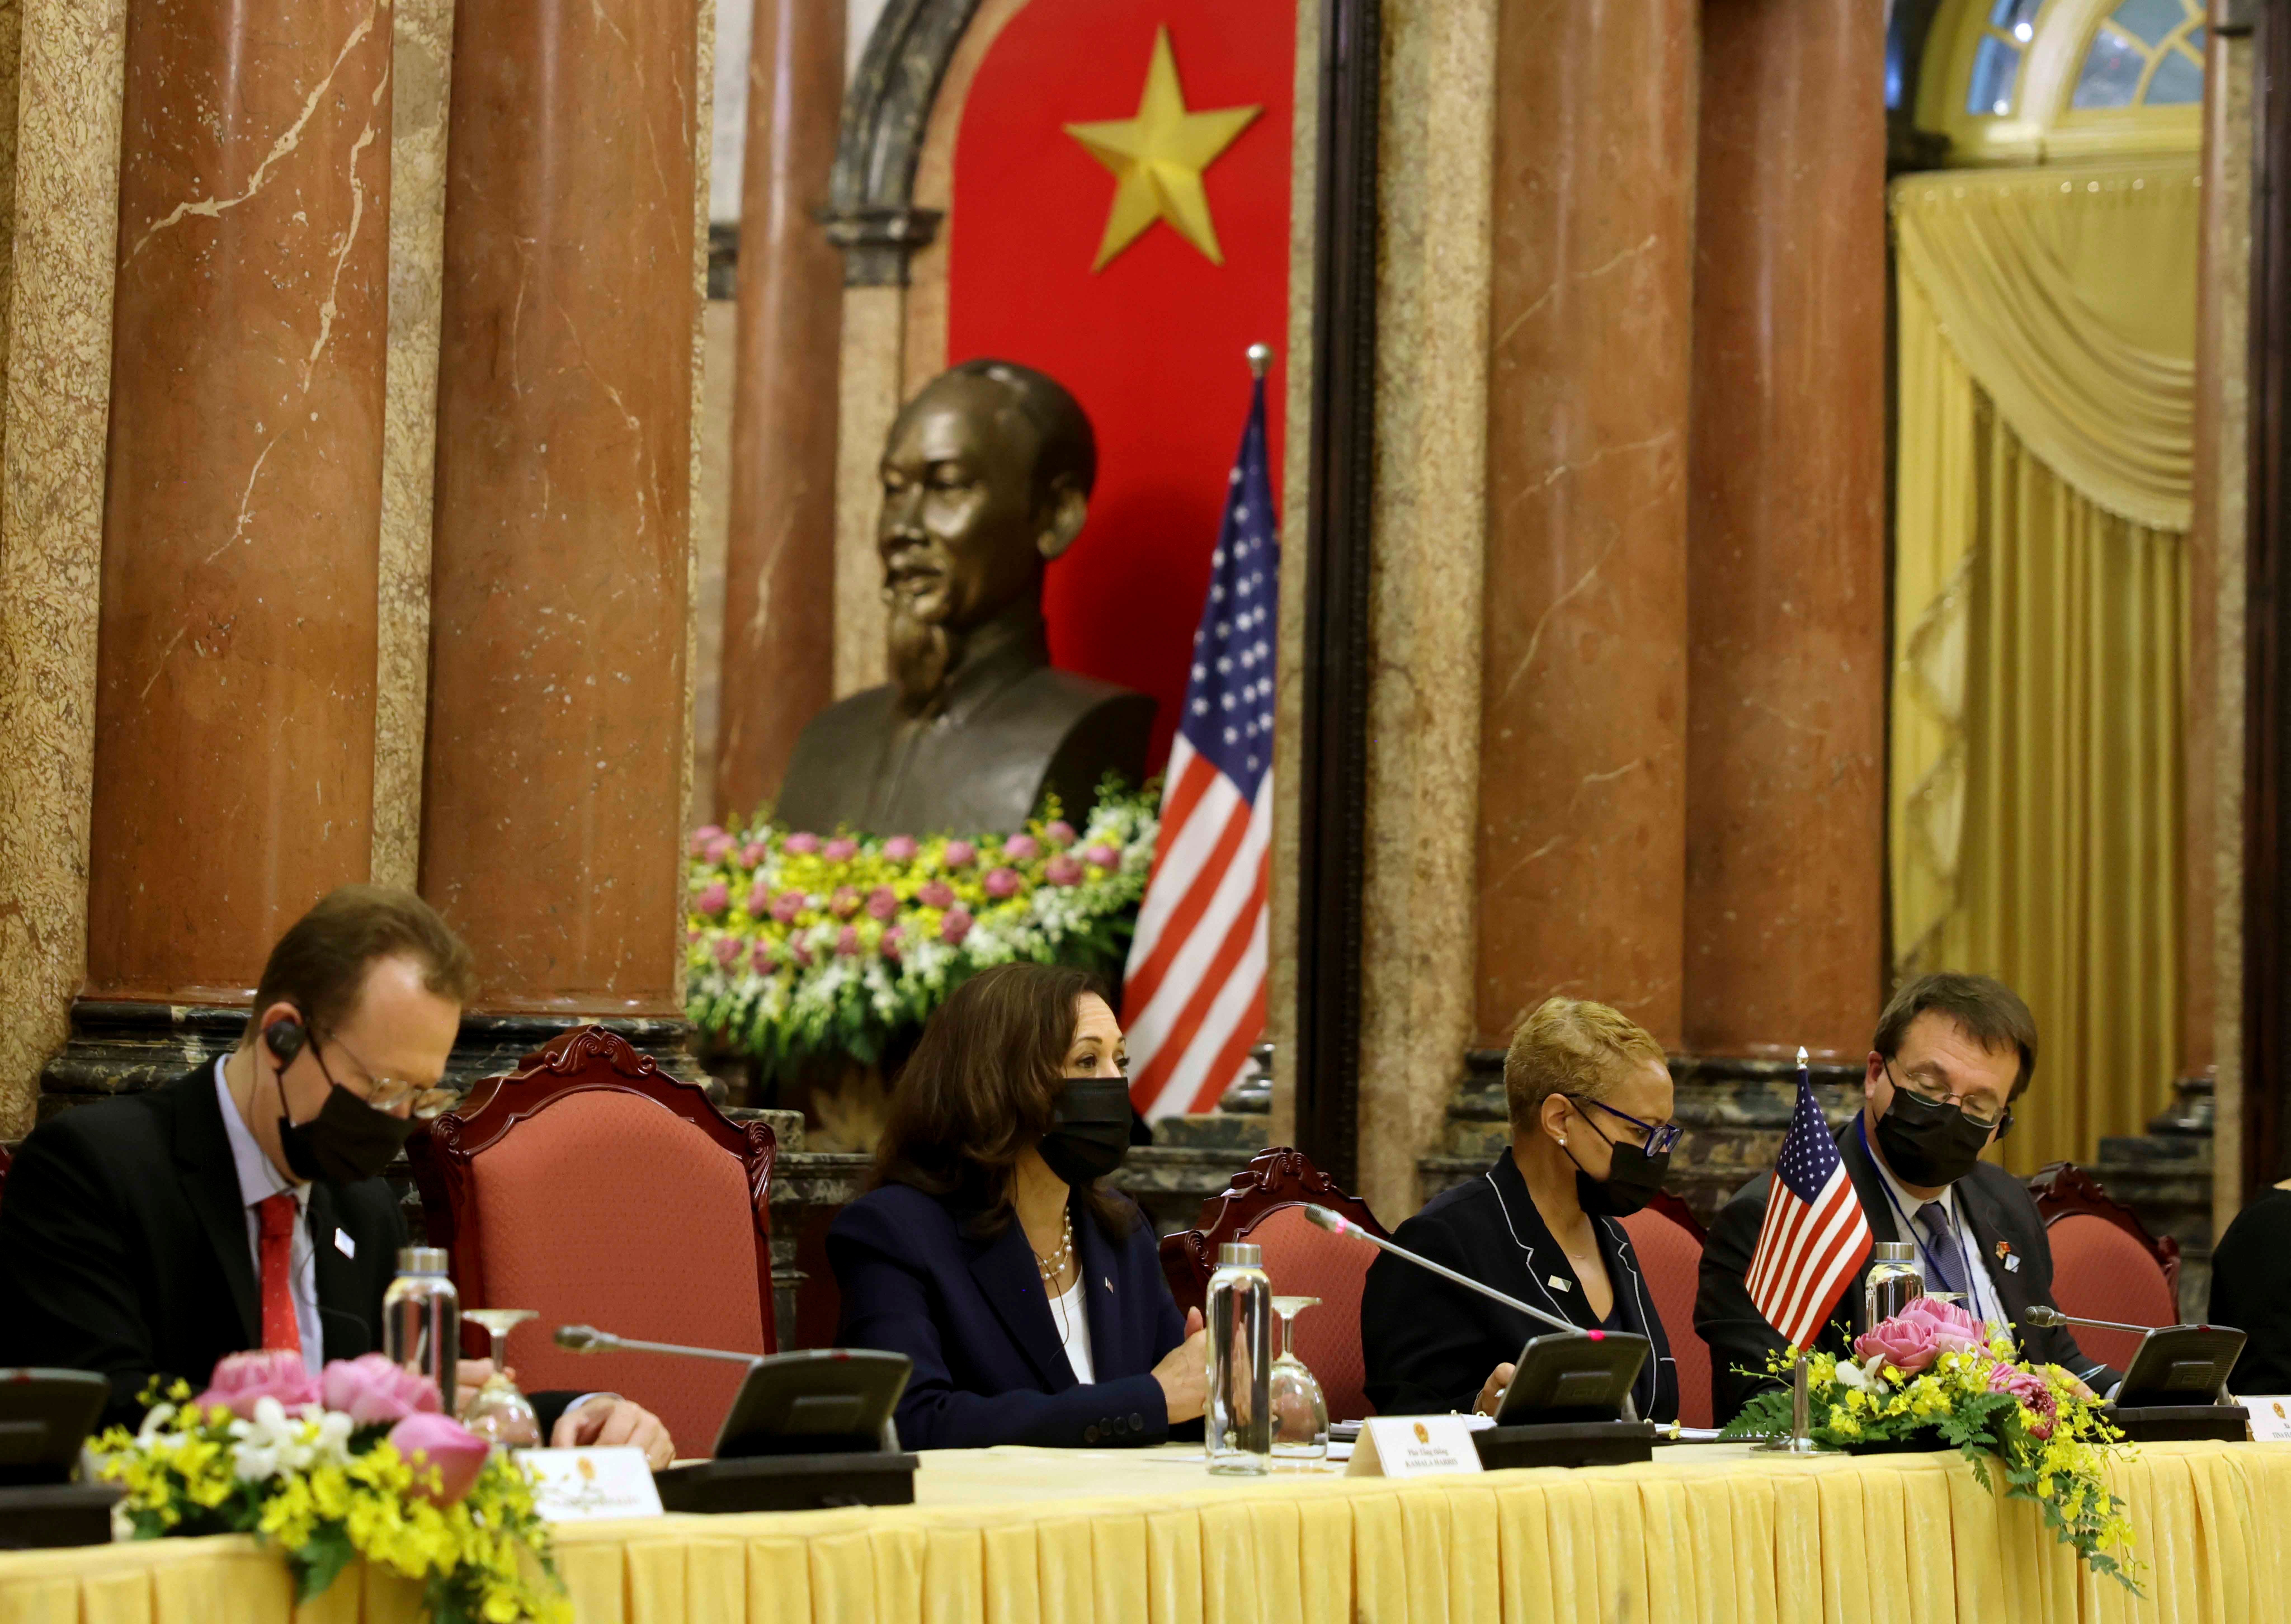 Vietnam: US Should Urge Release of Dissidents